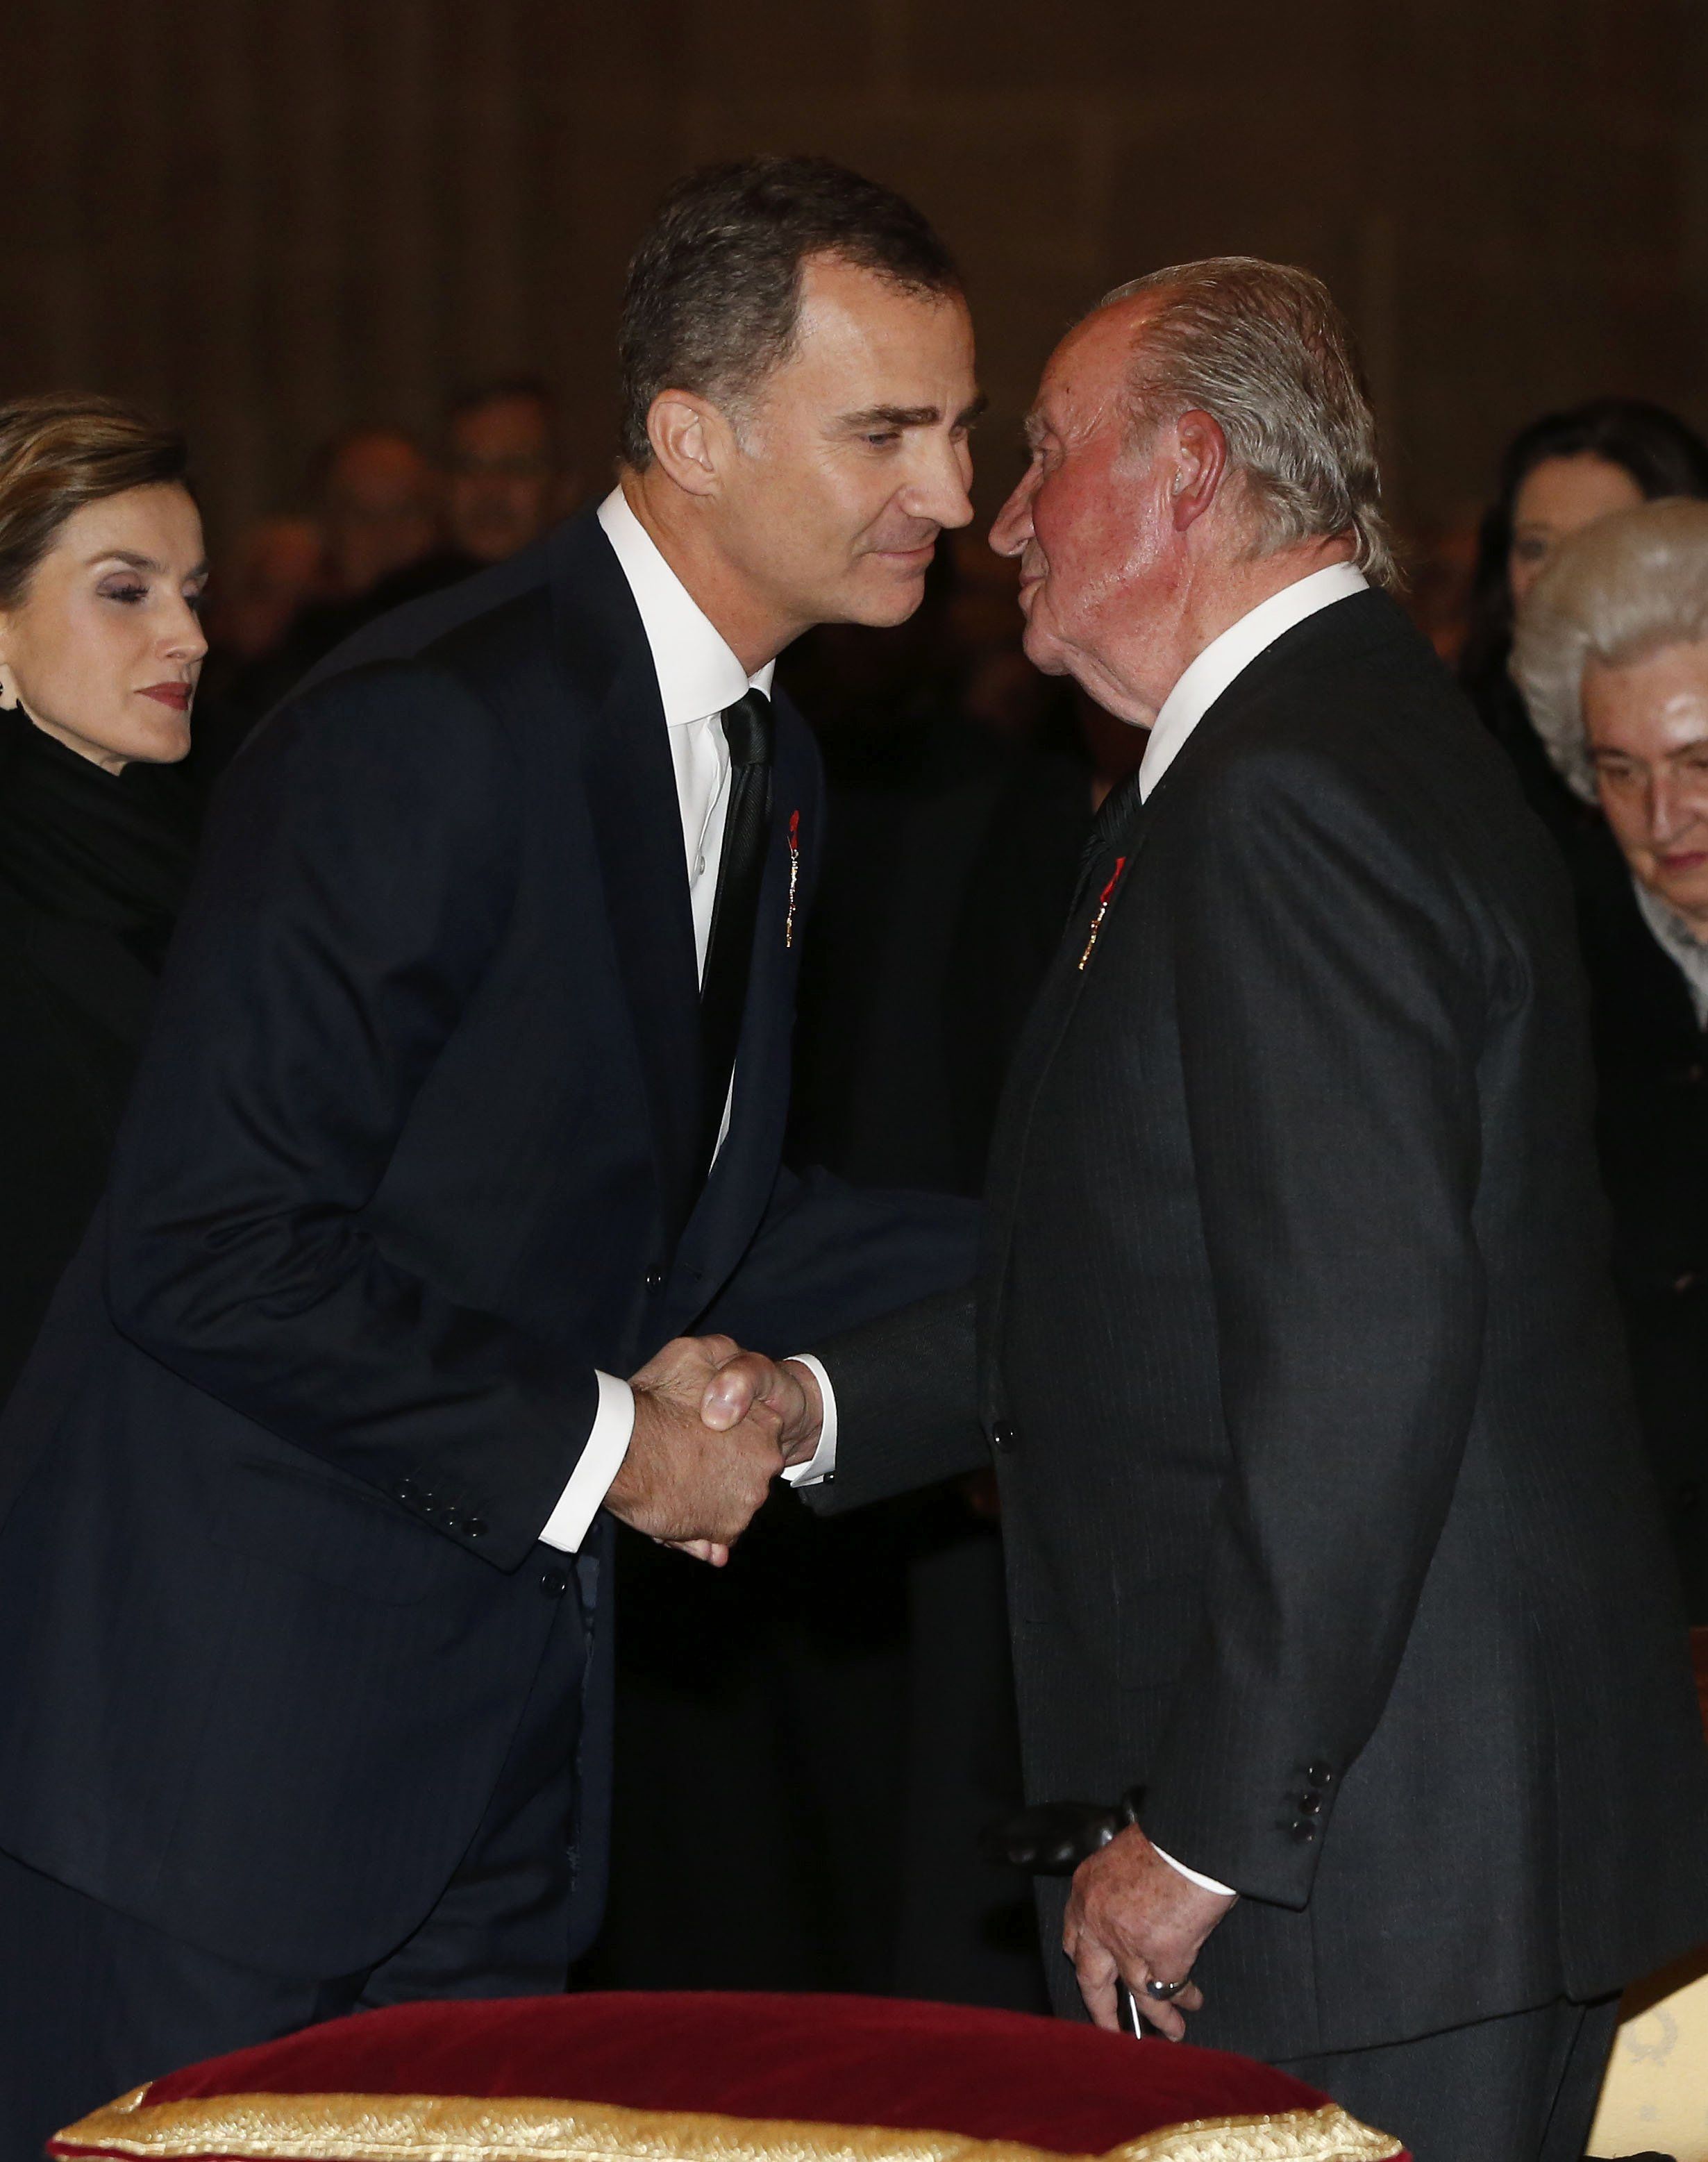 Luxury honeymoon of Spain's Felipe VI funded by a Juan Carlos proxy, says Telegraph